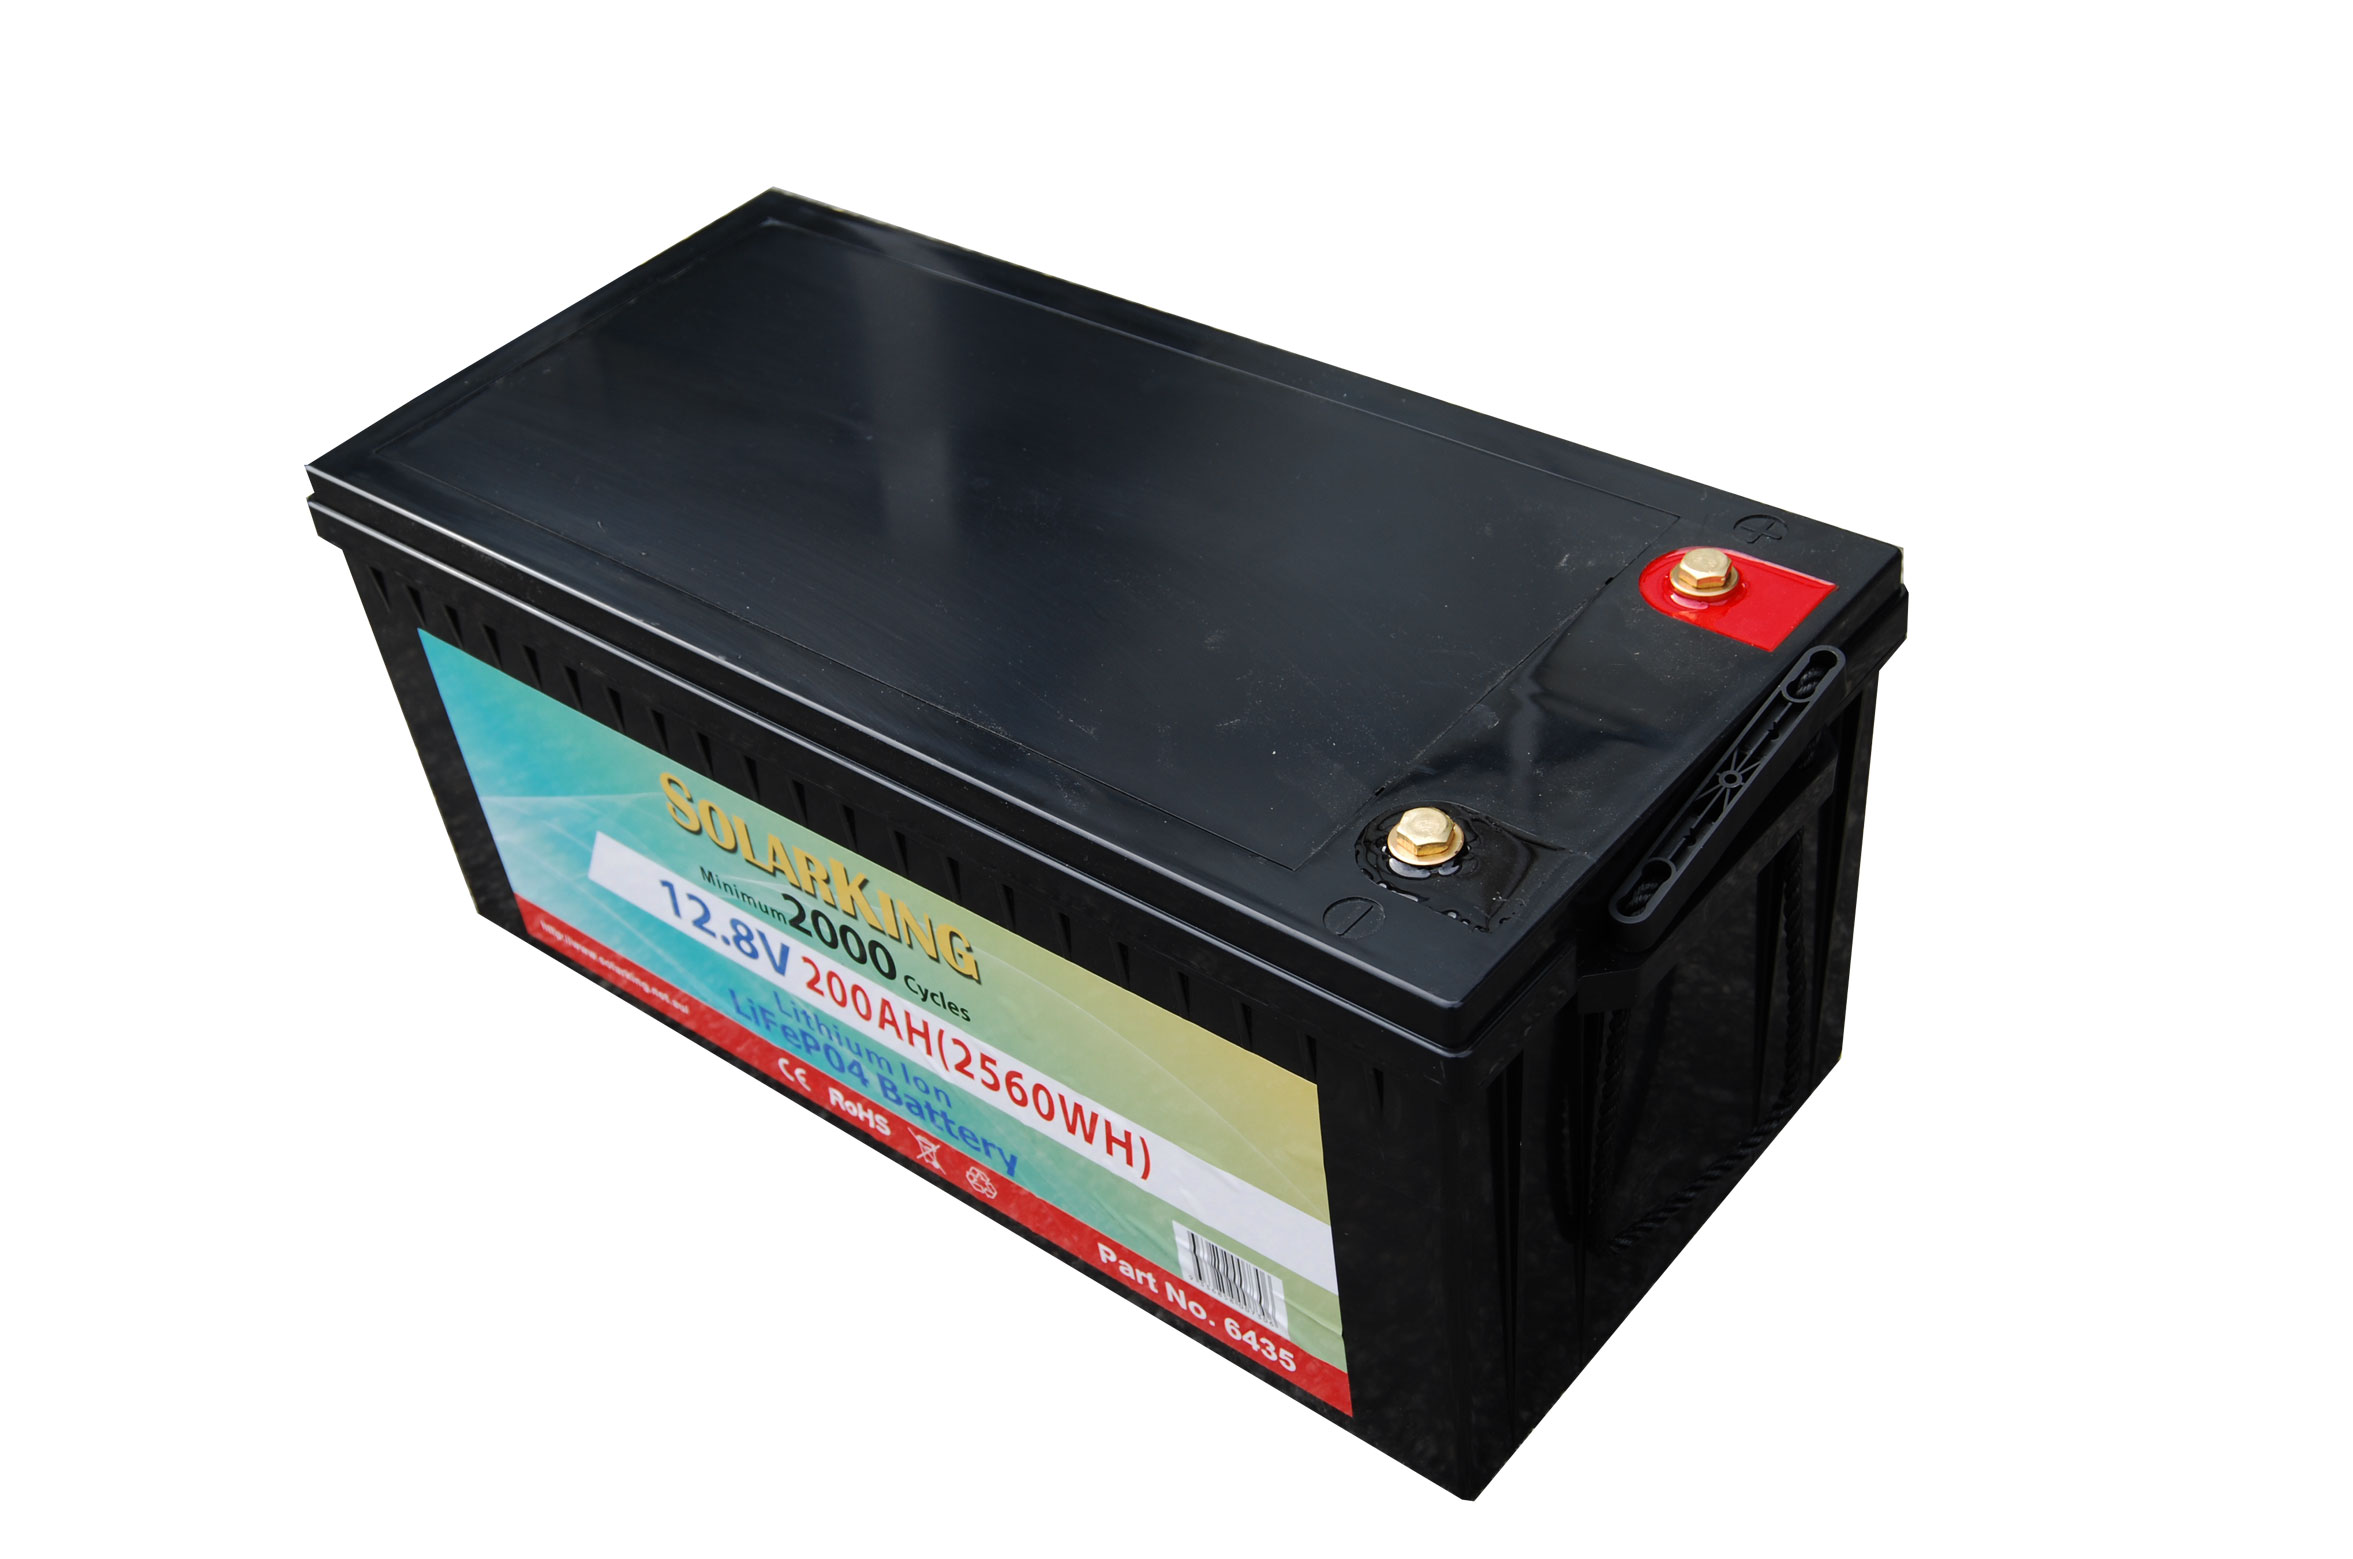 200AH Lithium LiFe PO4 SolarKing Battery - LB-200-12-80